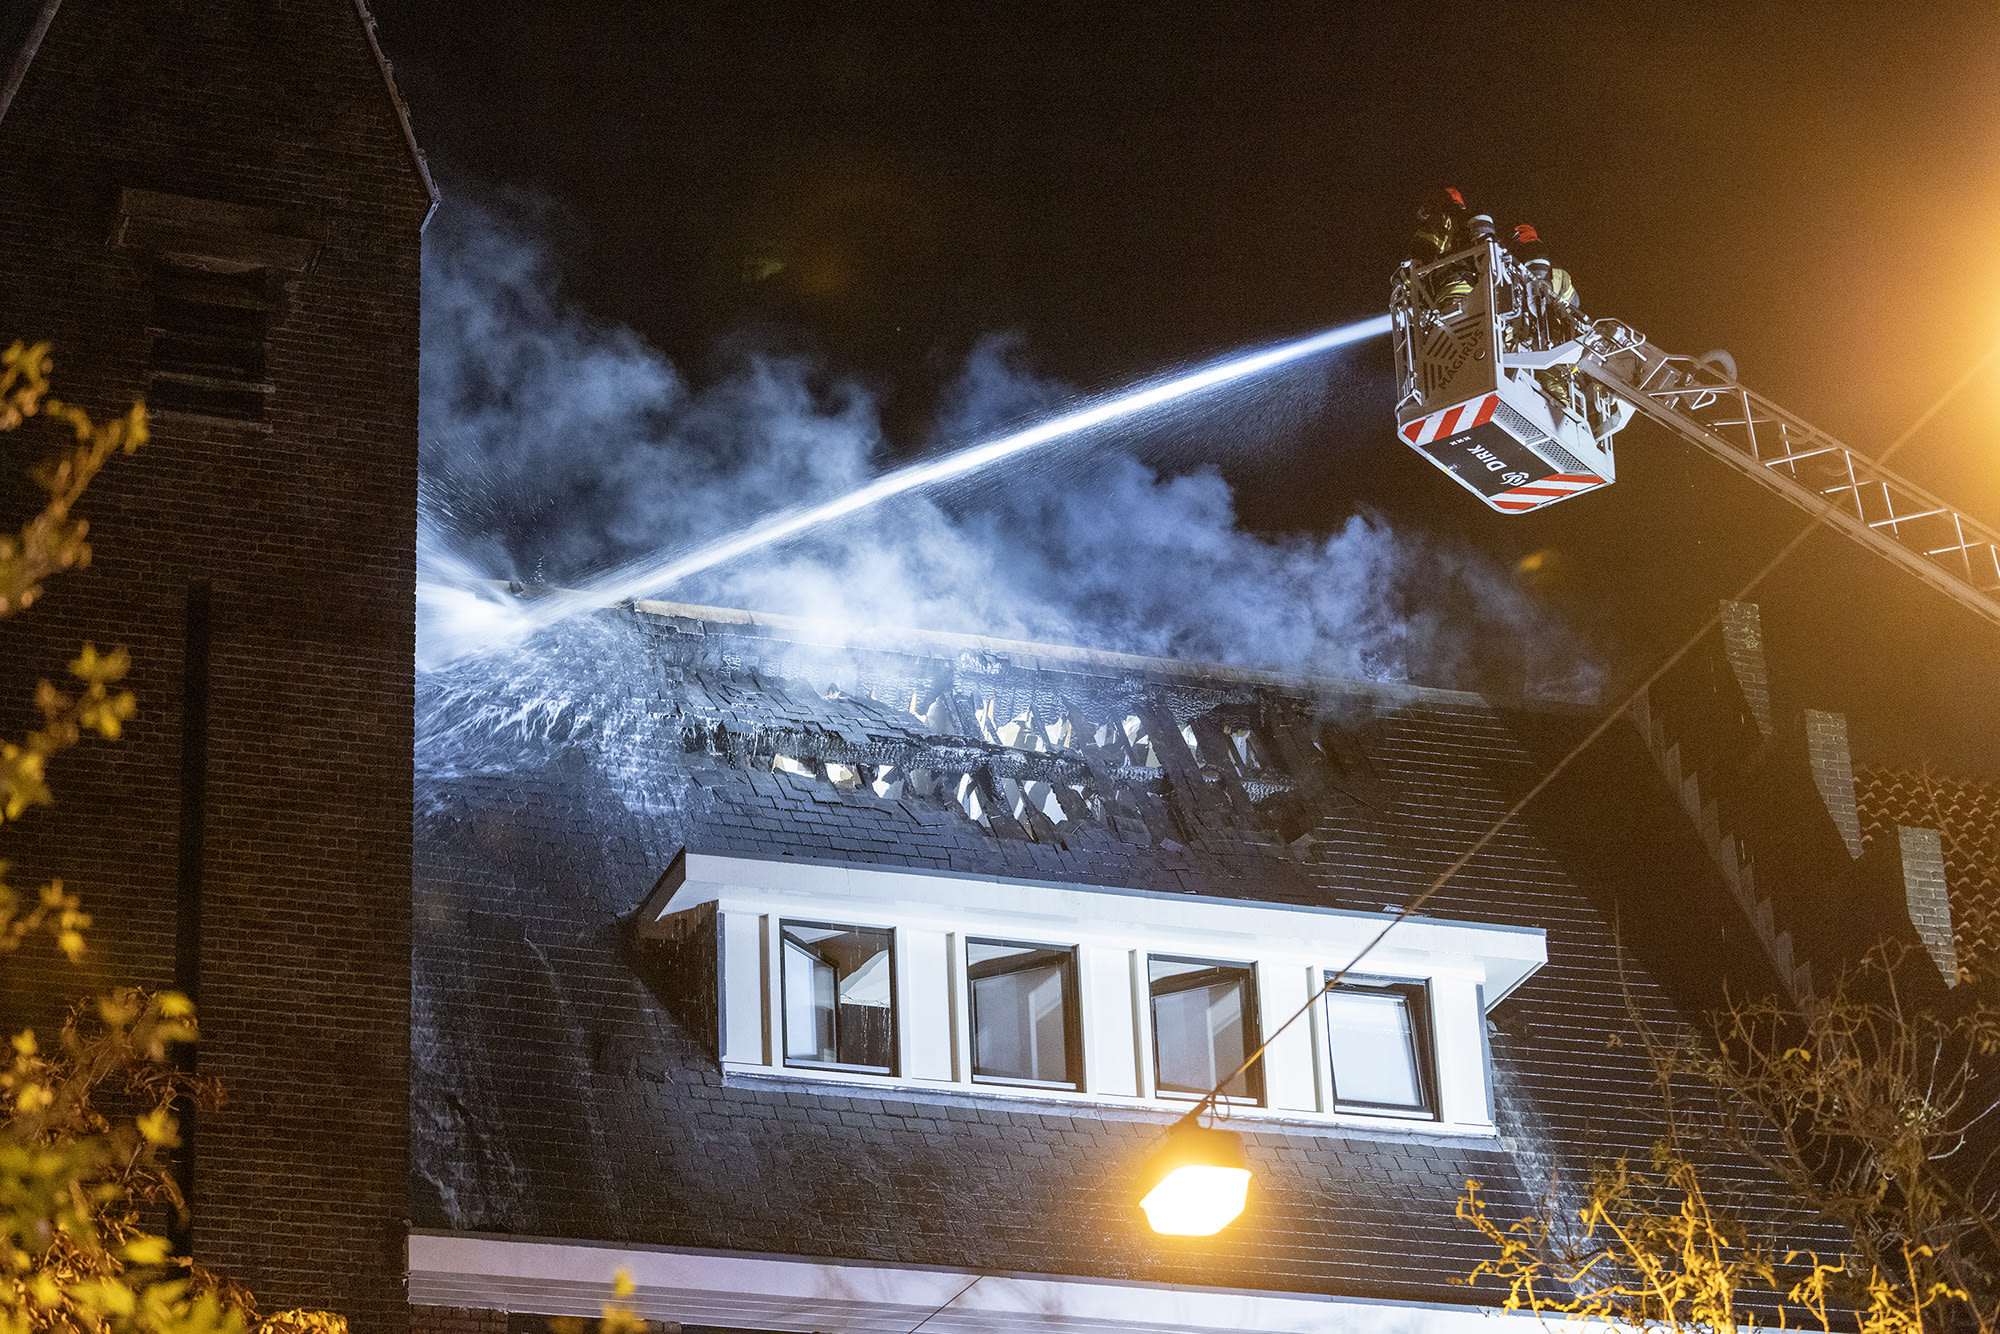 Hotel met ruim honderd vluchtelingen ontruimd na brand in Amsterdamse woning